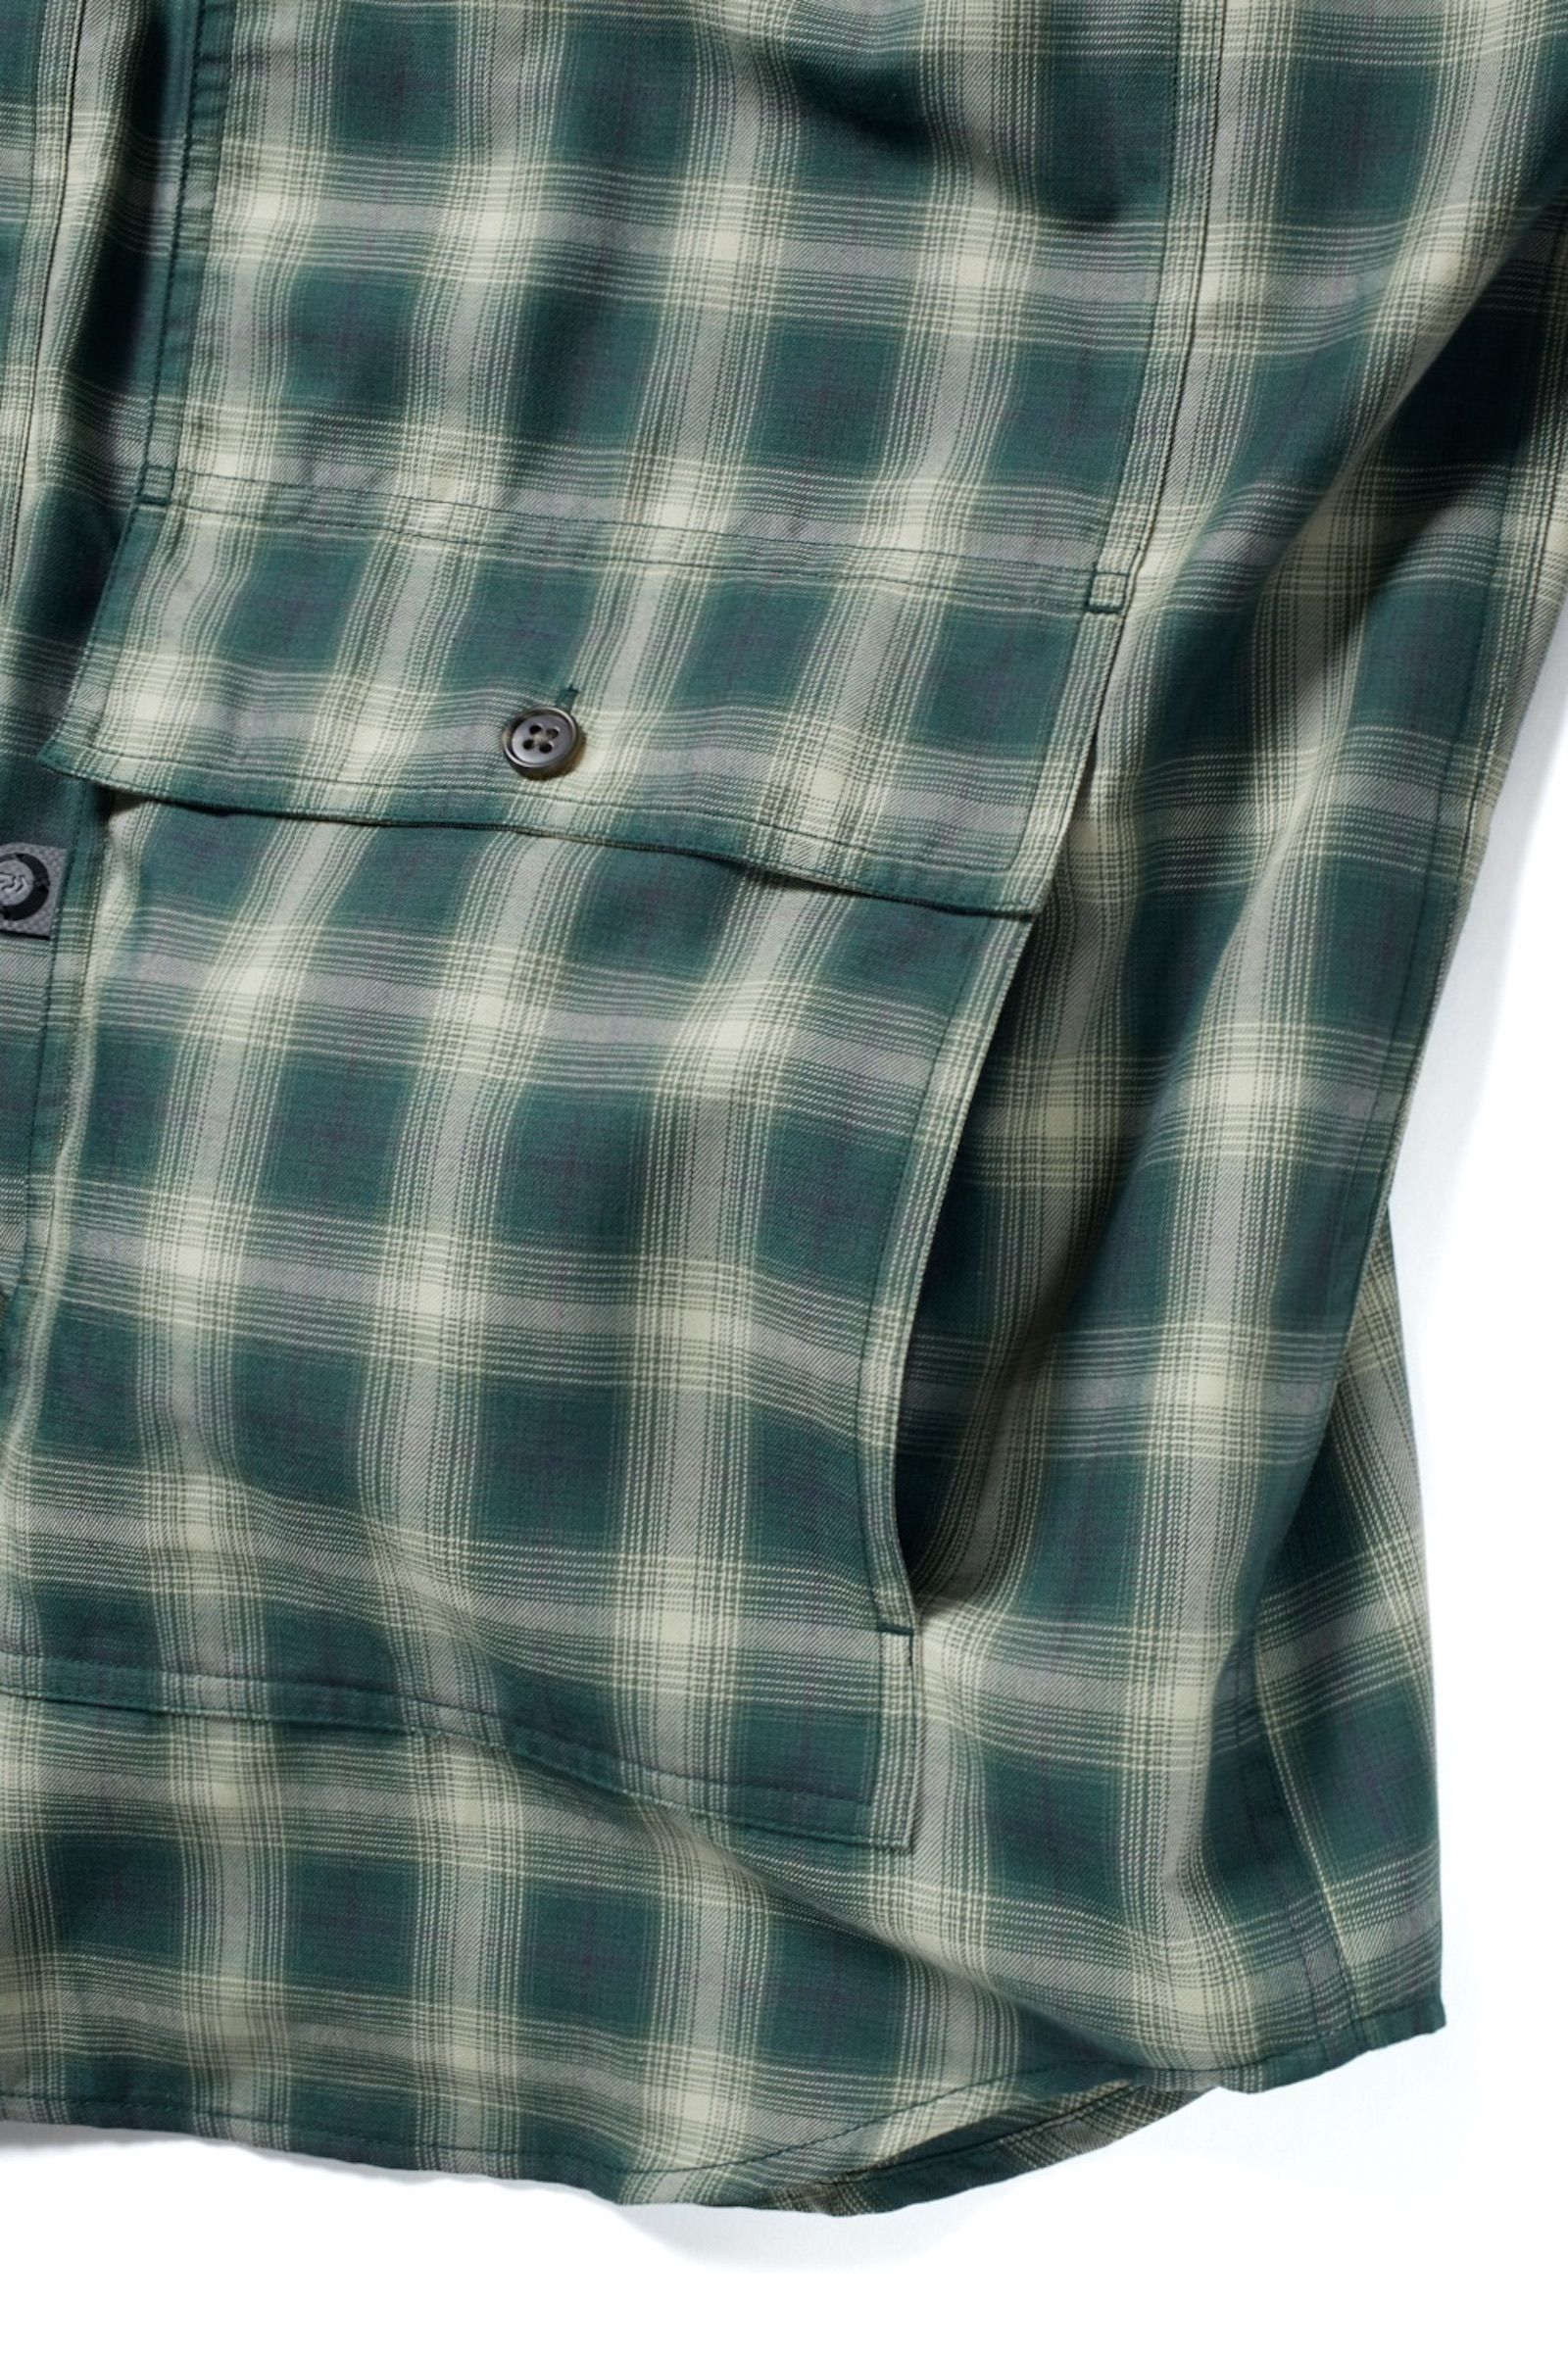 DAIWA PIER39 - tech logger shirts -brown- 22aw men 8月27日発売 